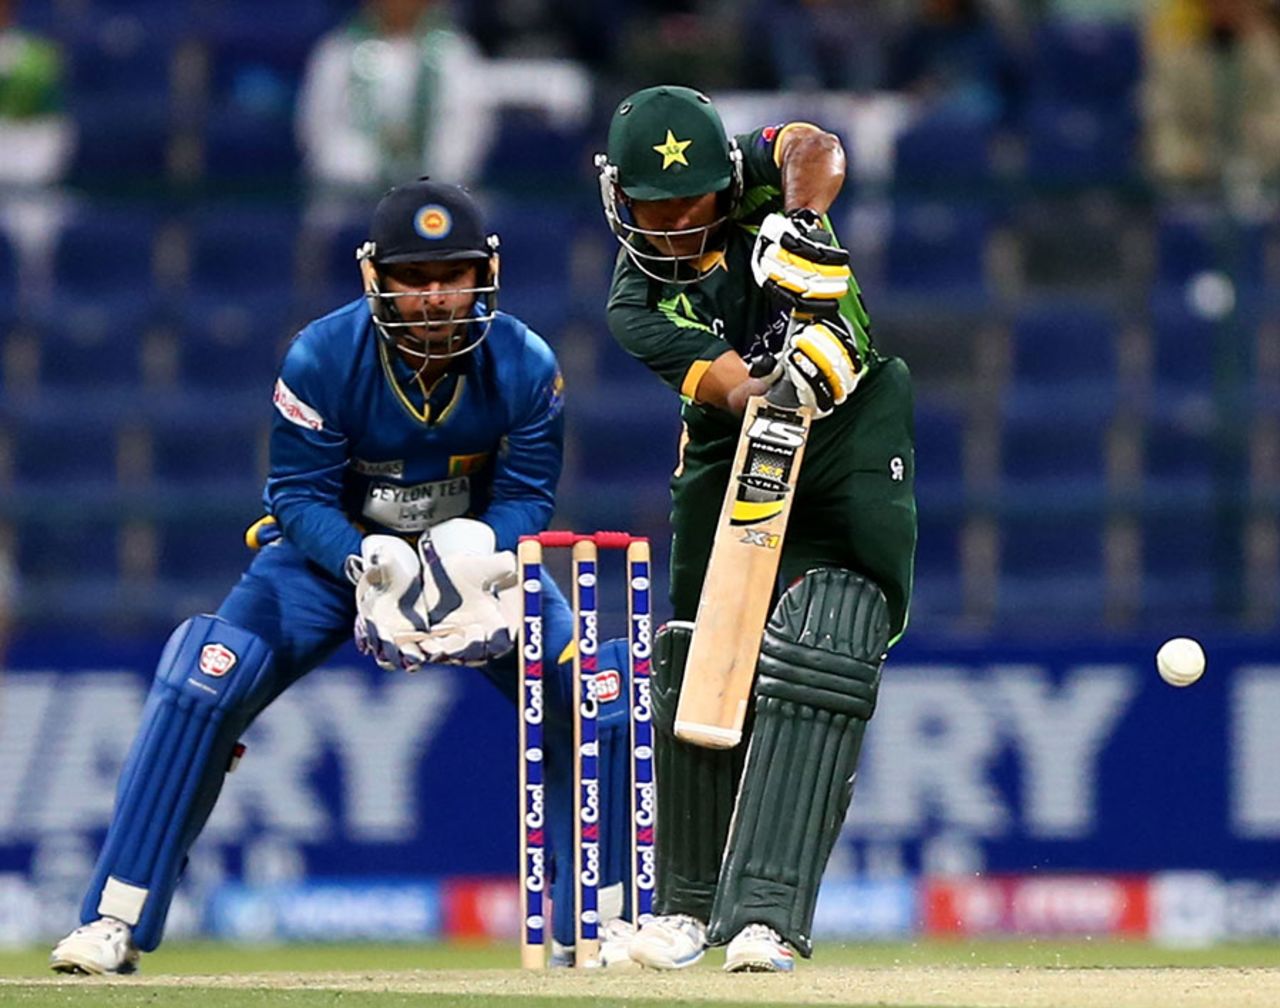 Mohammad Hafeez plays down the ground, Pakistan v Sri Lanka, 4th ODI, Abu Dhabi, December 25, 2013